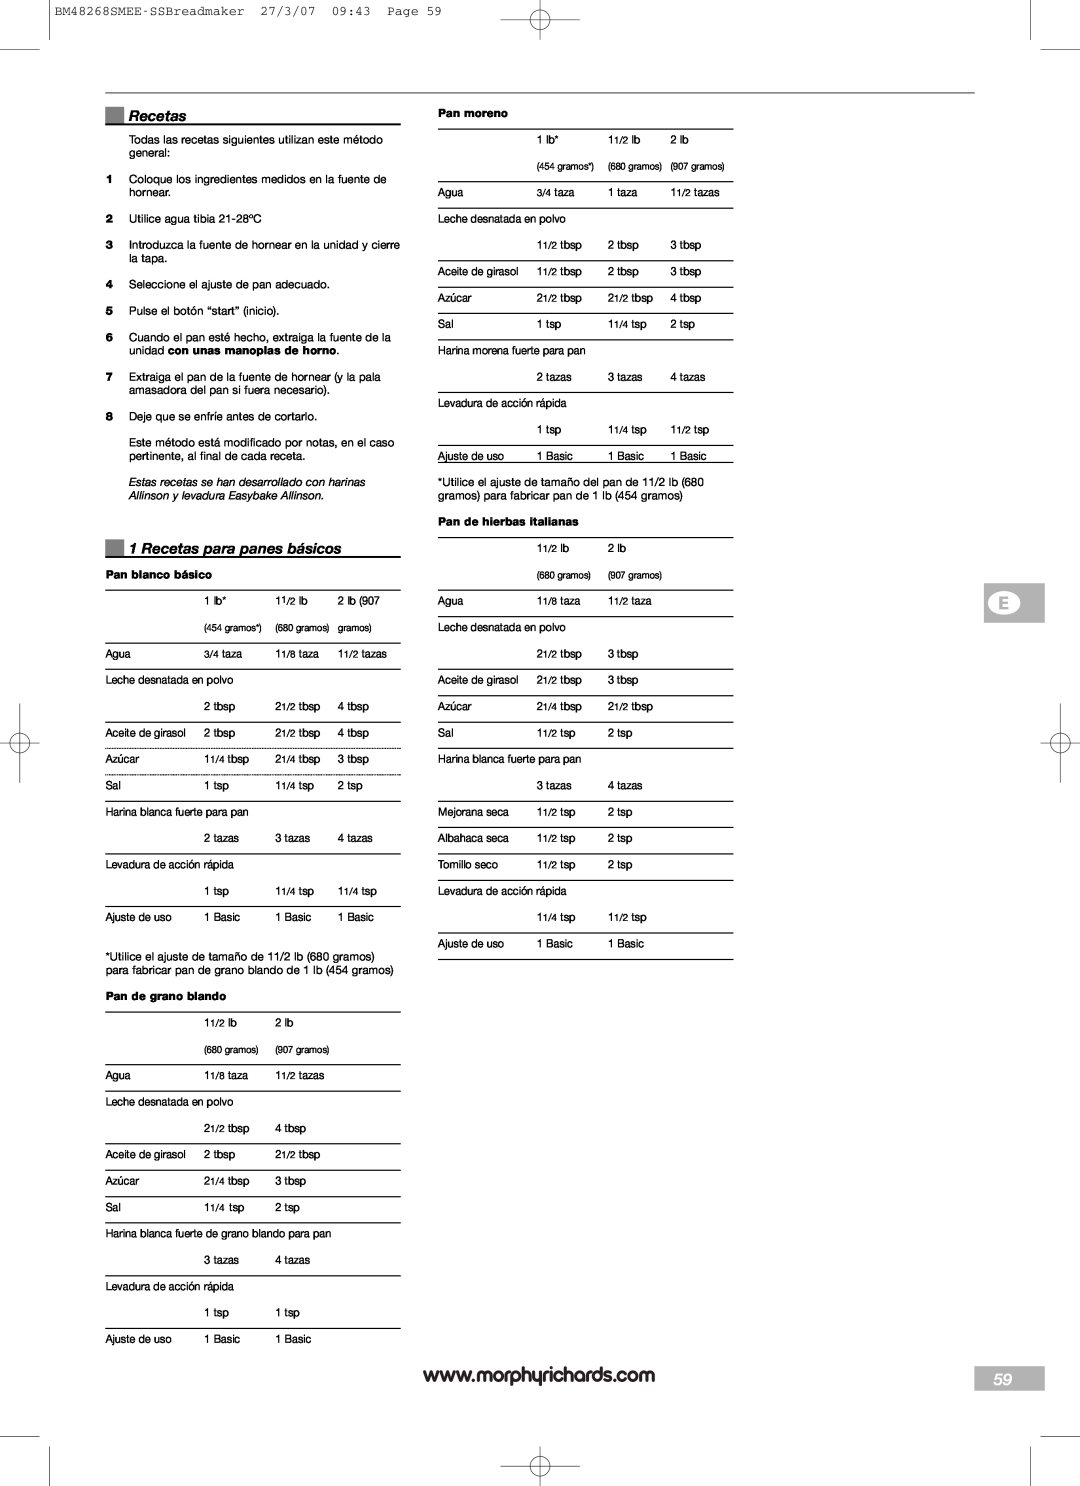 Morphy Richards manual Recetas para panes básicos, BM48268SMEE-SSBreadmaker27/3/07 09:43 Page, Pan moreno 